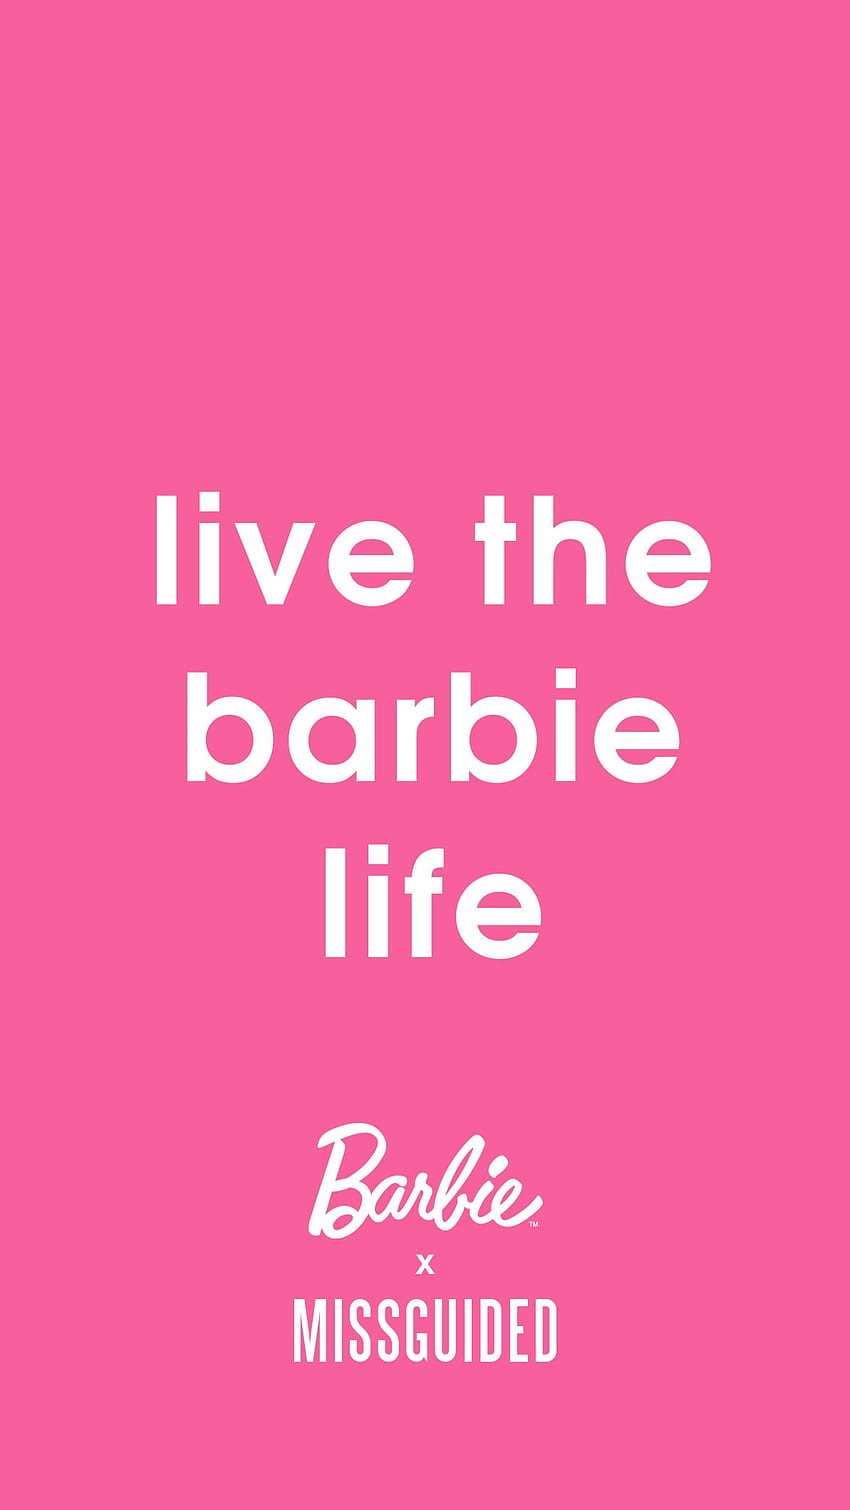 Mejor Barbie. Barbie, mundo de Barbie, cumpleaños de Barbie, logotipo de Barbie fondo de pantalla del teléfono